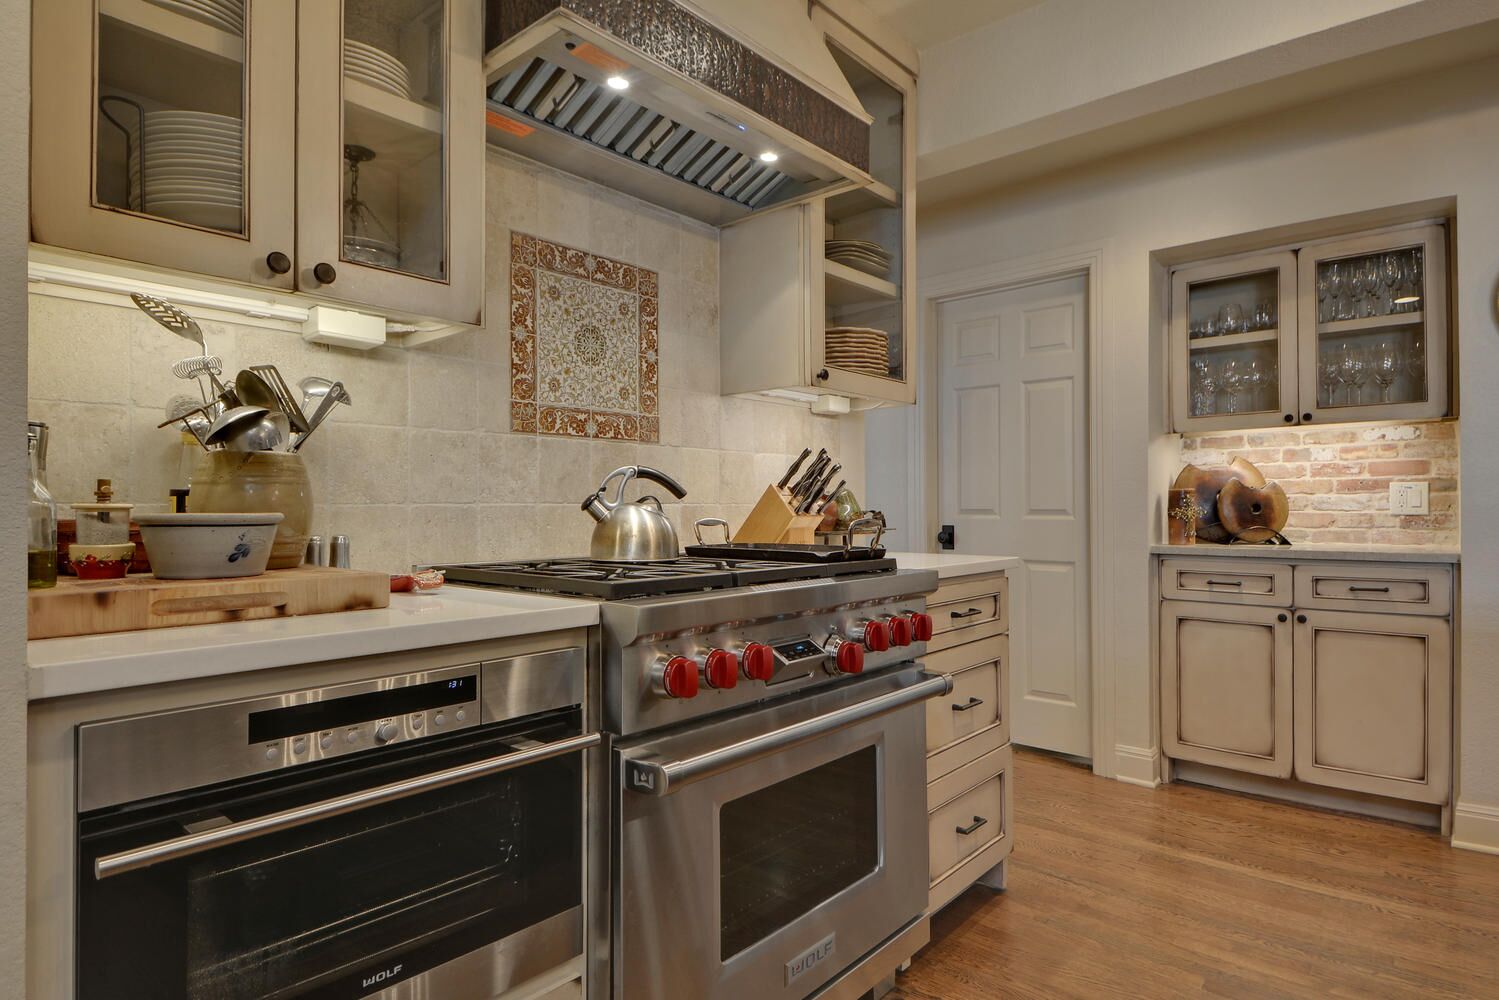 Stainless kitchen range with tile backsplash design